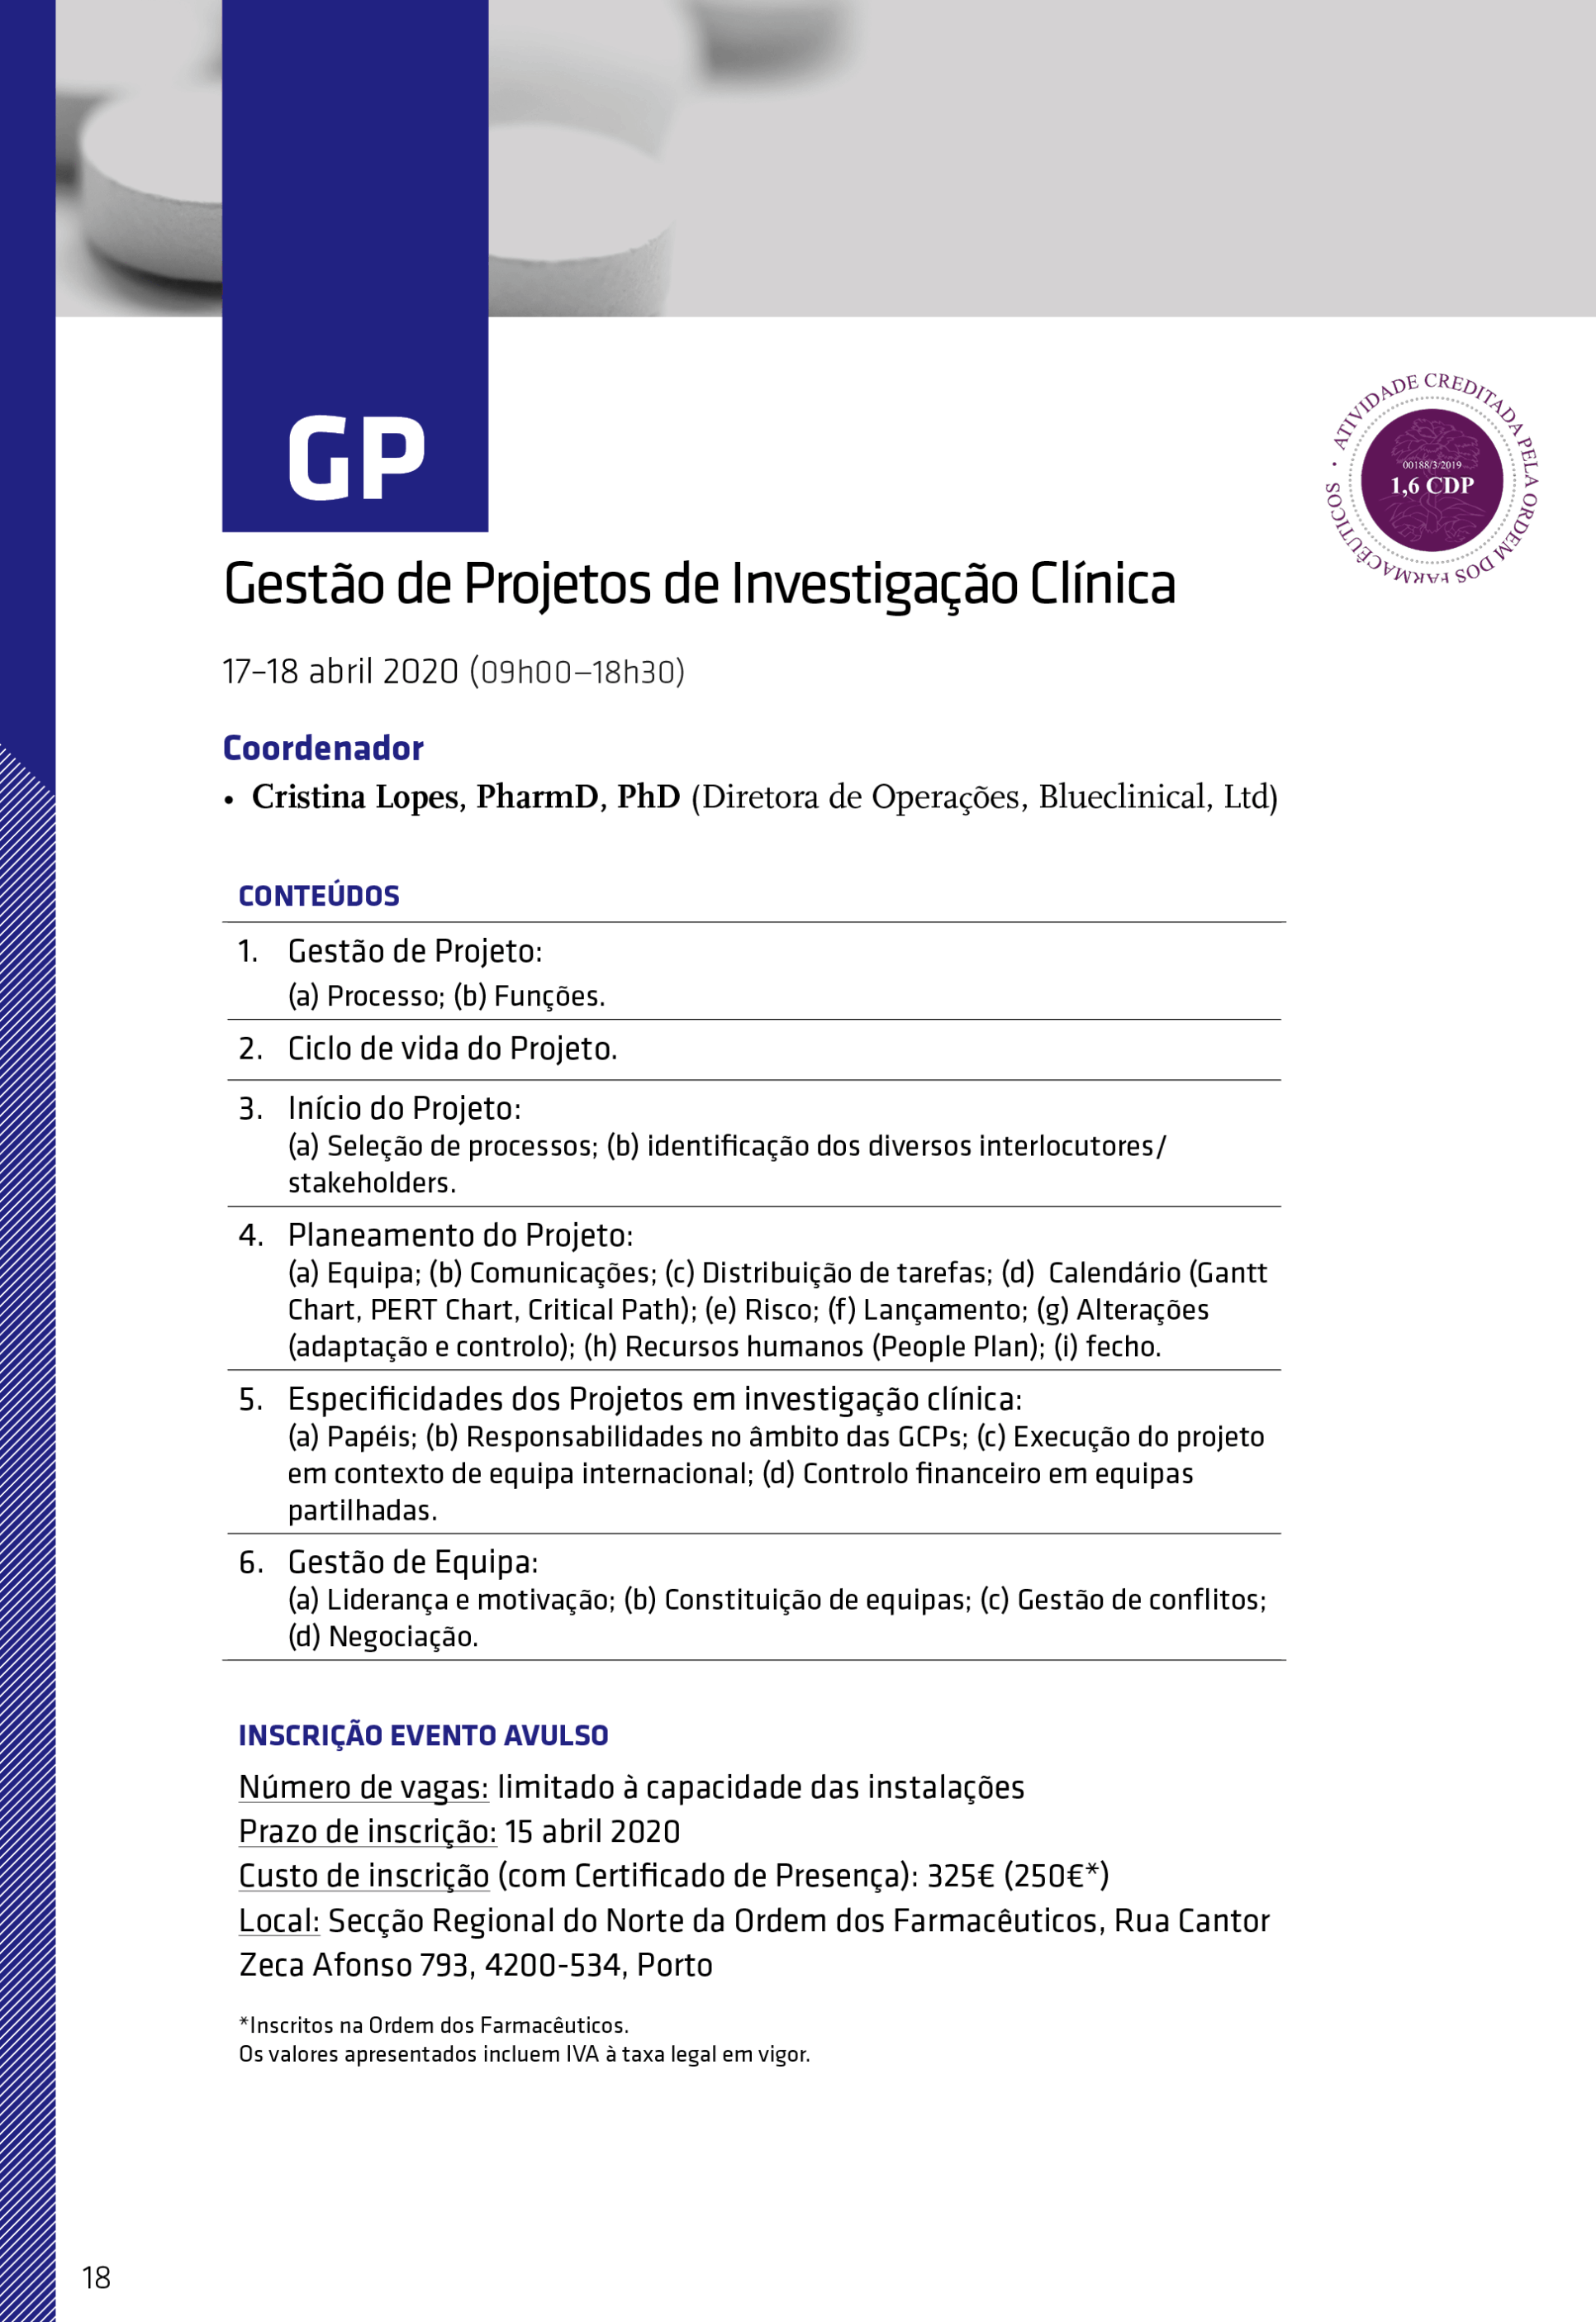 GP - Programa